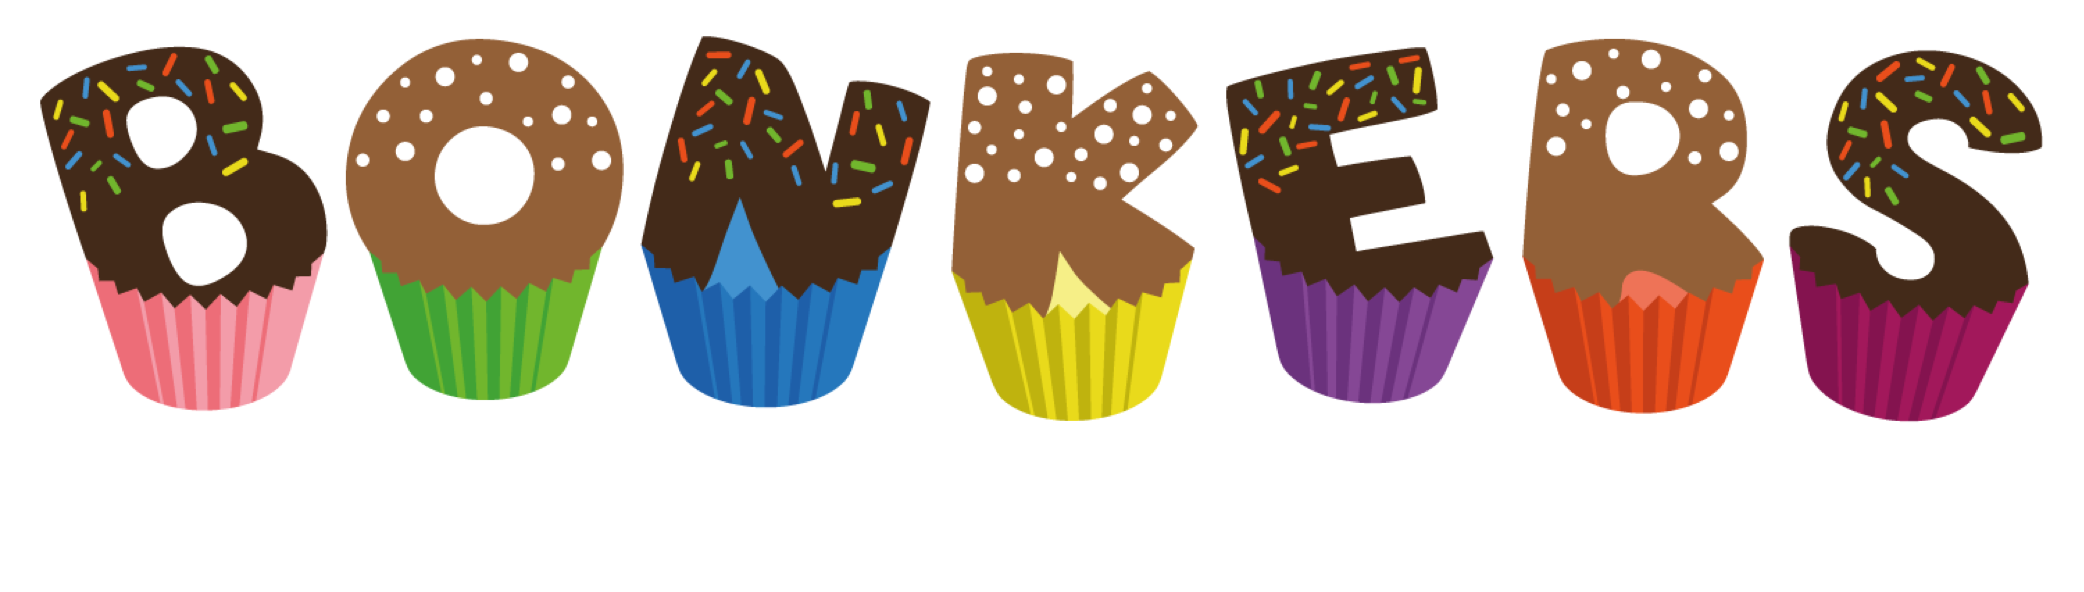 Bonkers Cupcakes logo